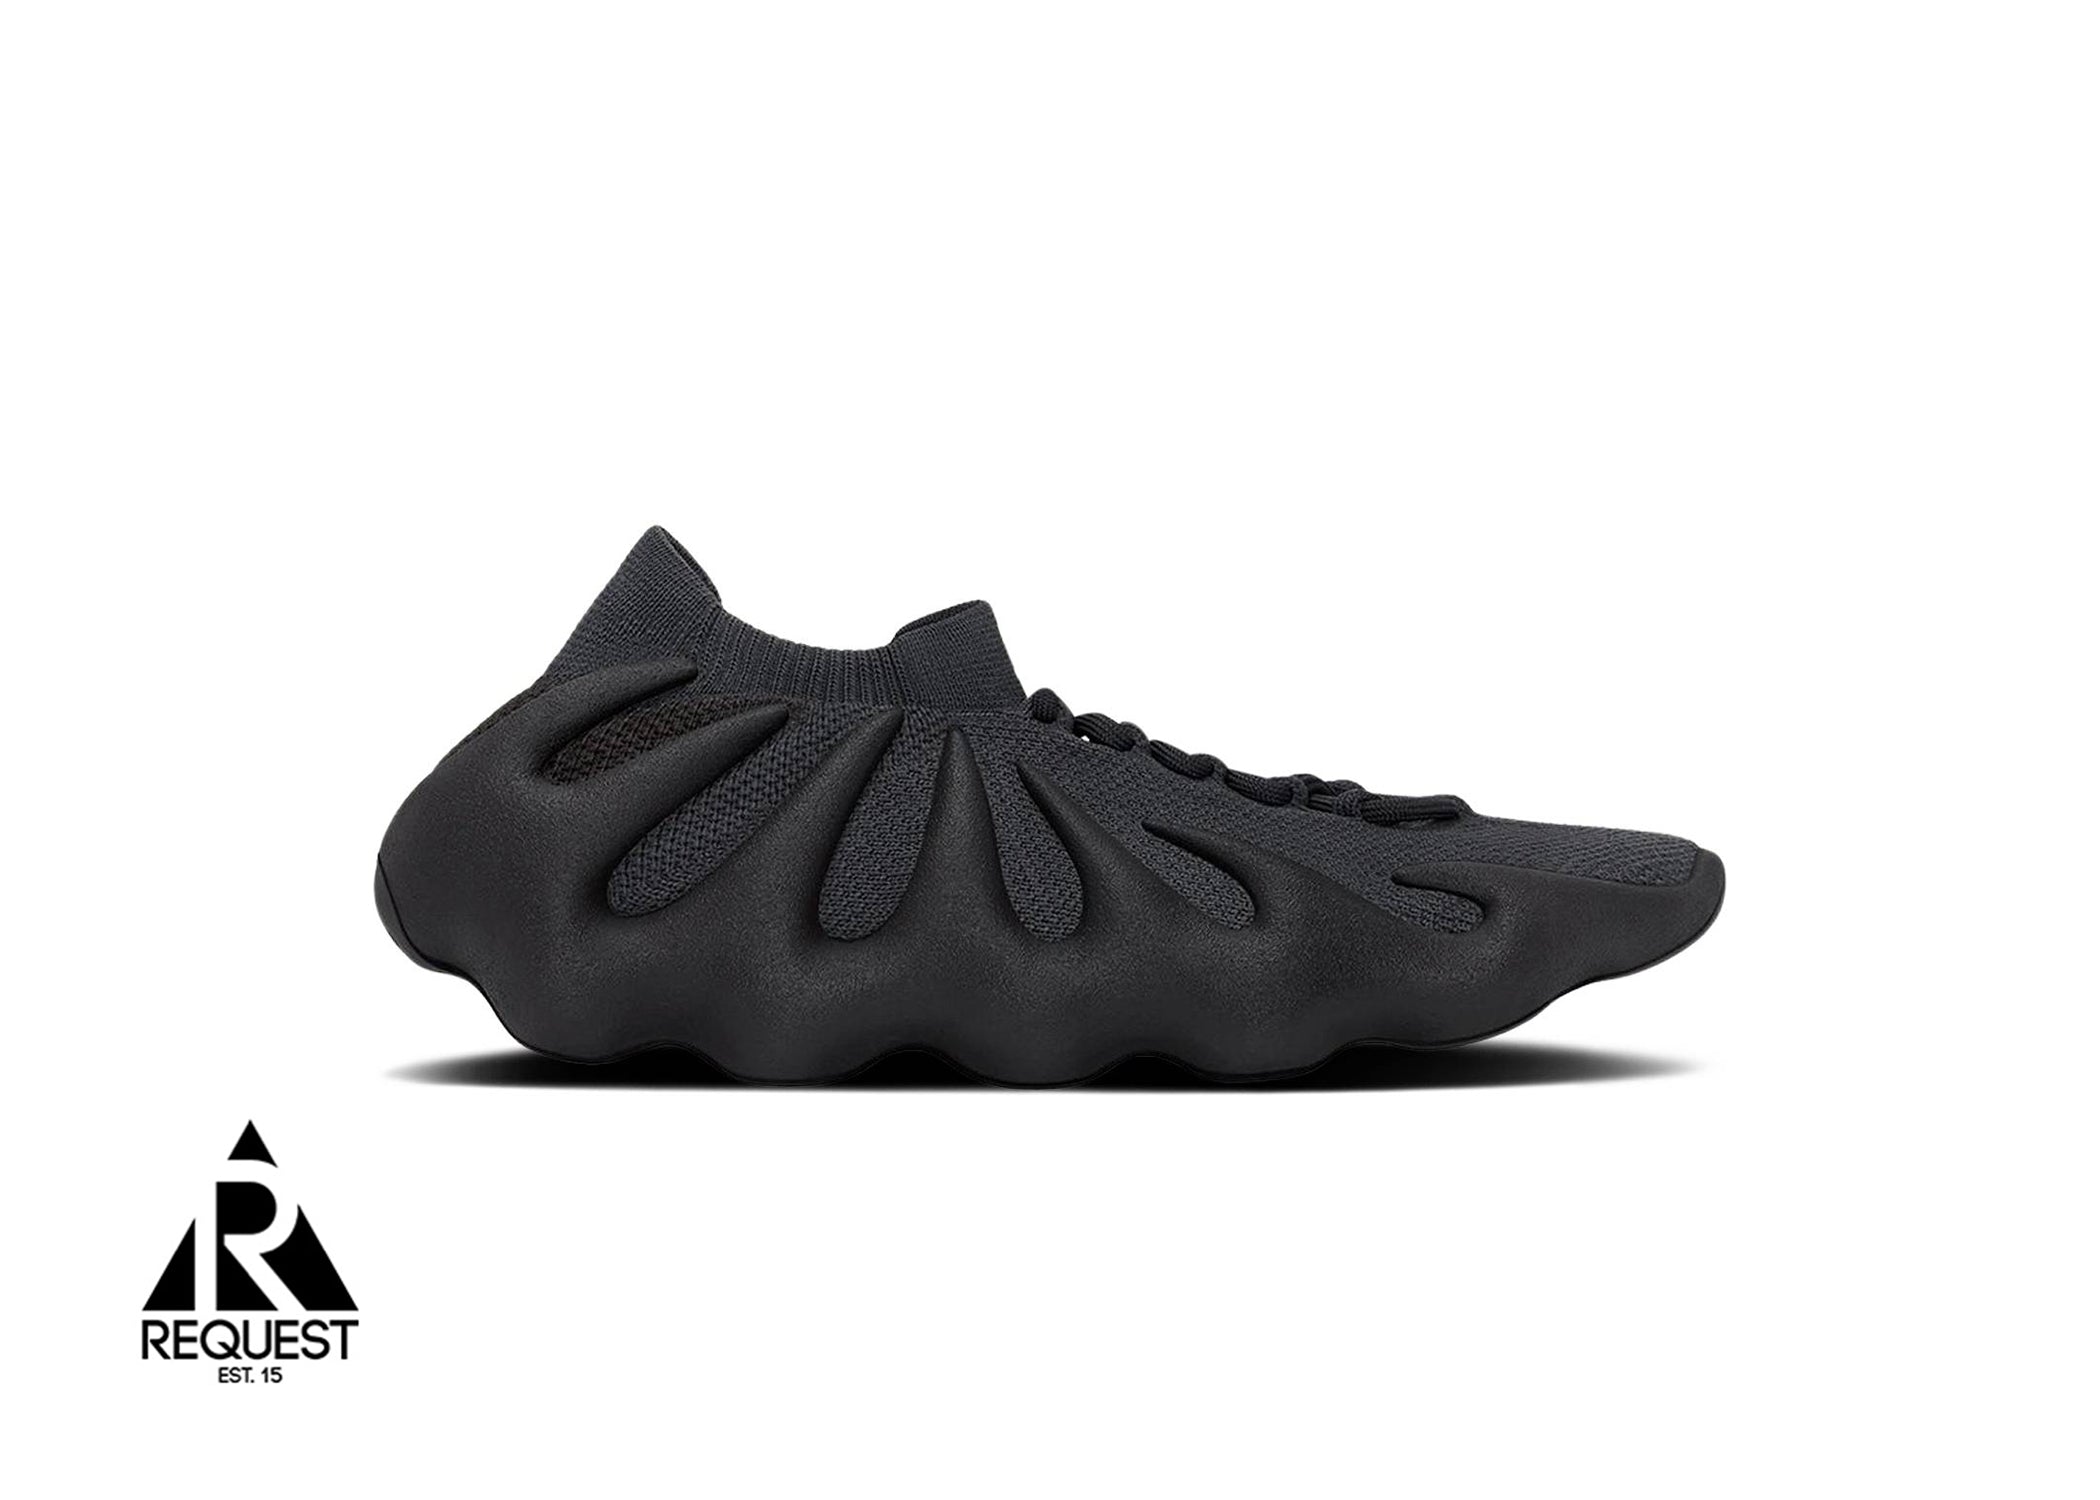 Adidas Yeezy 450 "Utility Black"